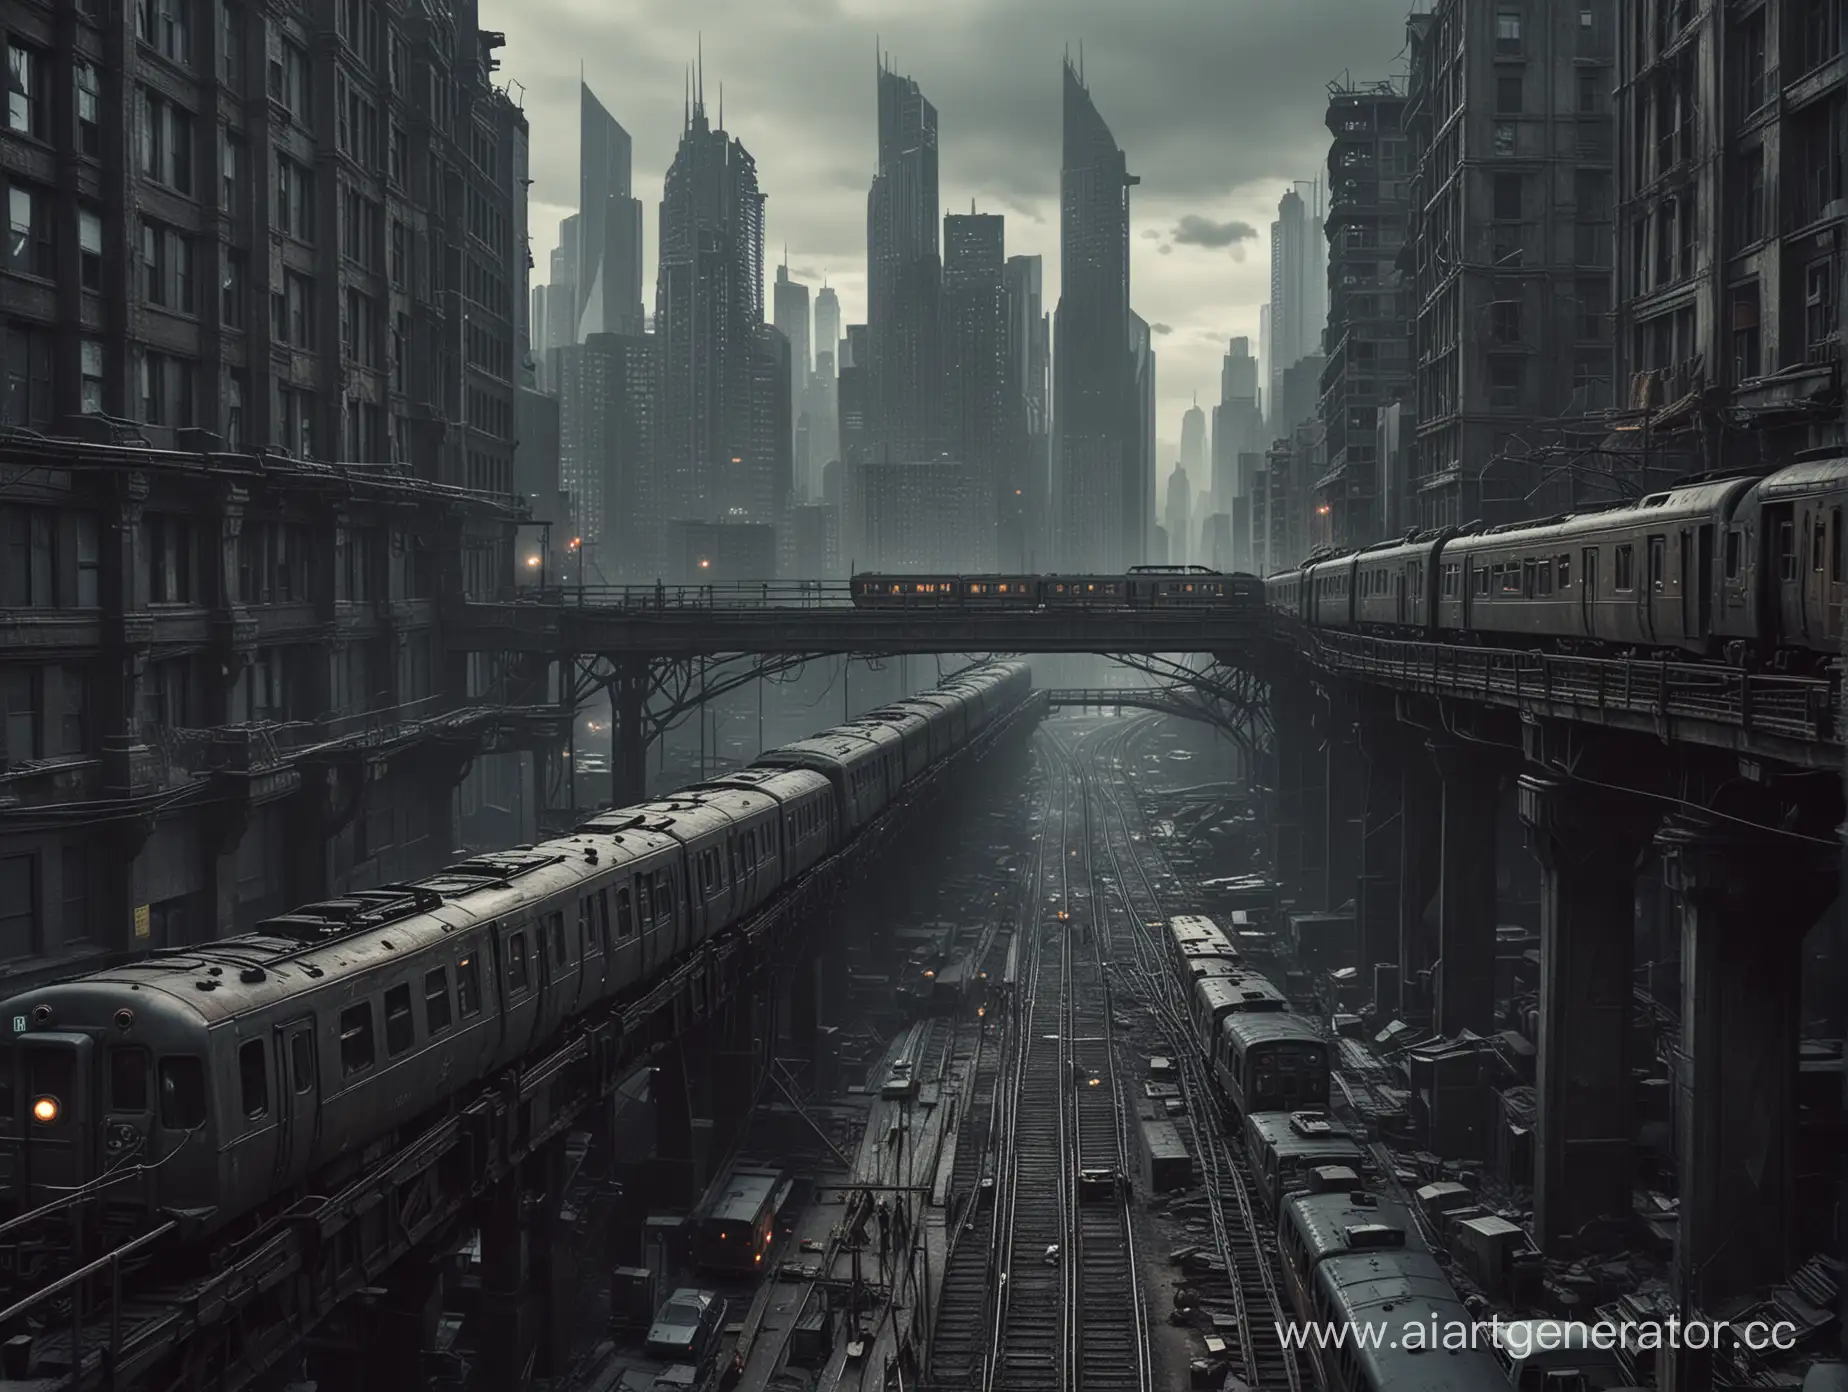 Apocalyptic-Train-Journey-Through-Urban-Skyscrapers